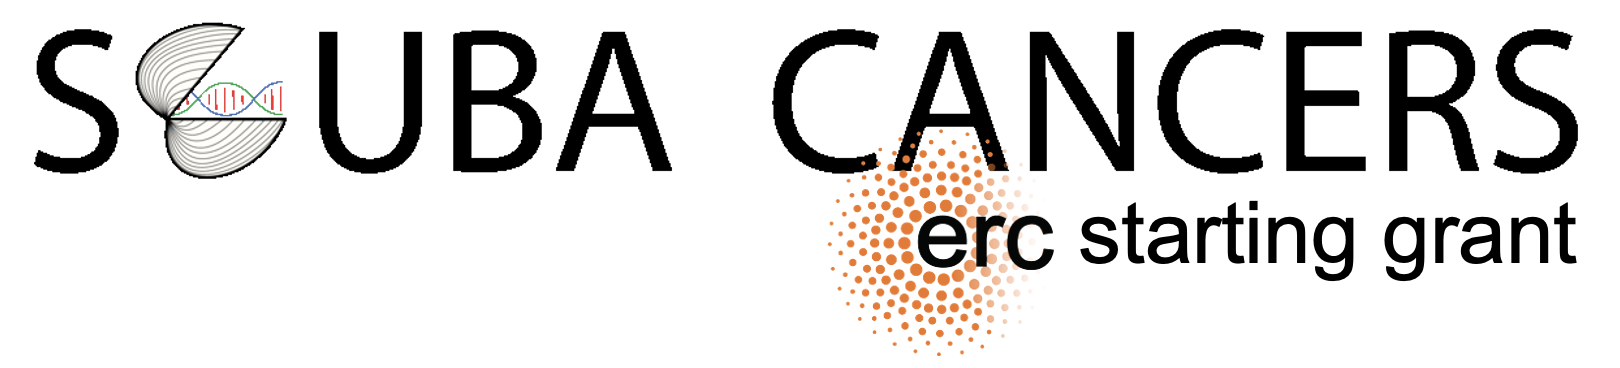 Scuba Cancers logo